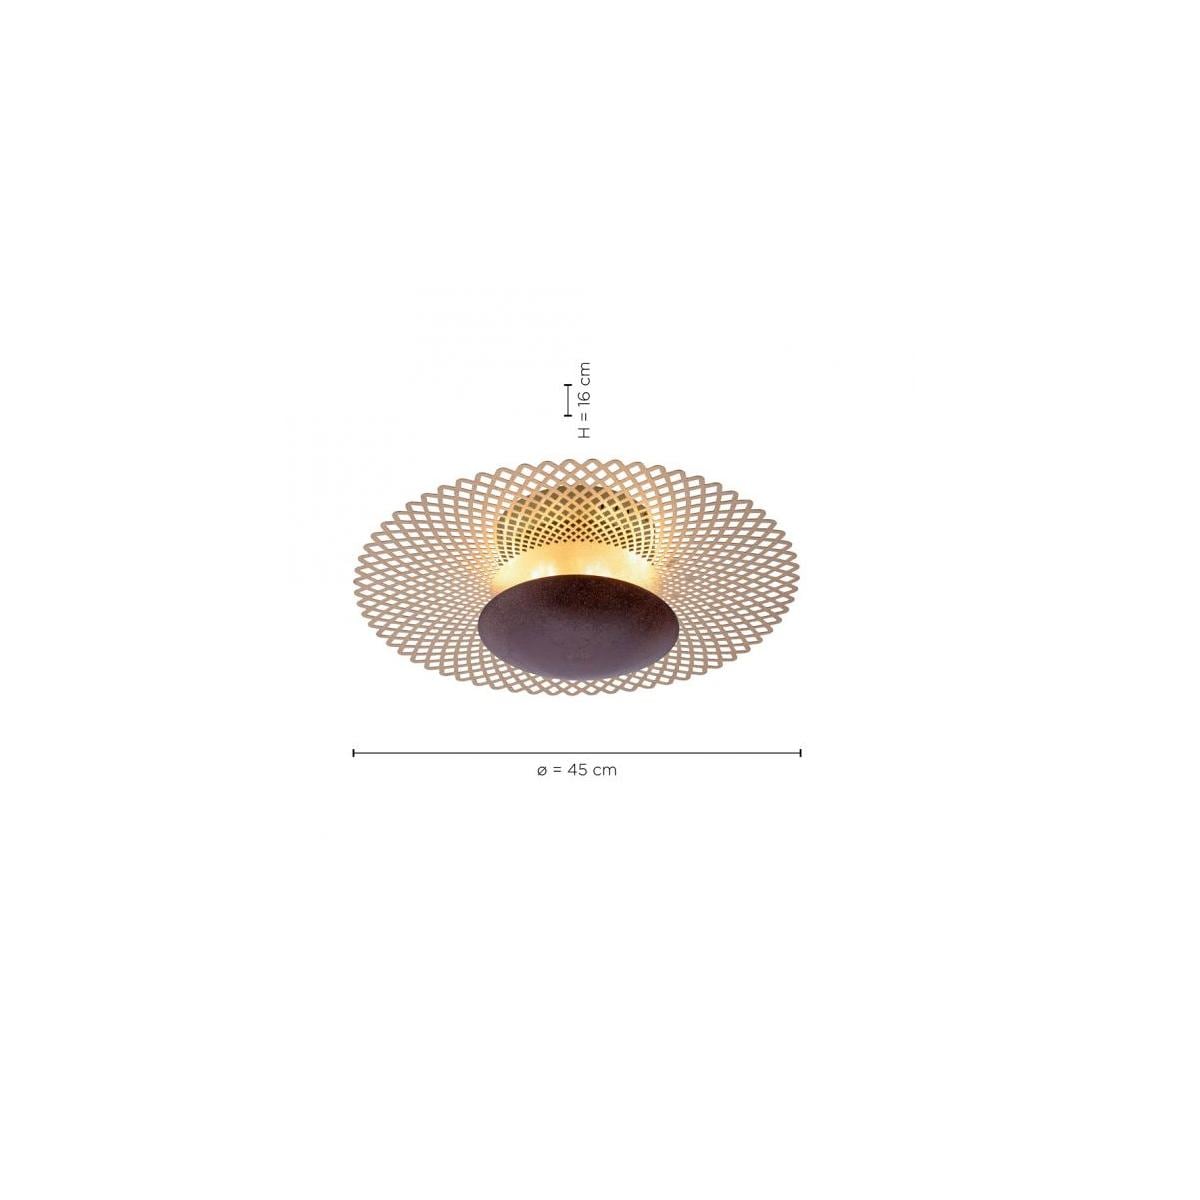 Paul Neuhaus LED blendfrei, rost-gold, (6551-48) dimmbar, Memory Elektroshop Funktion, indirekt, 18W, 2250lm Deckenleuchte, Wagner